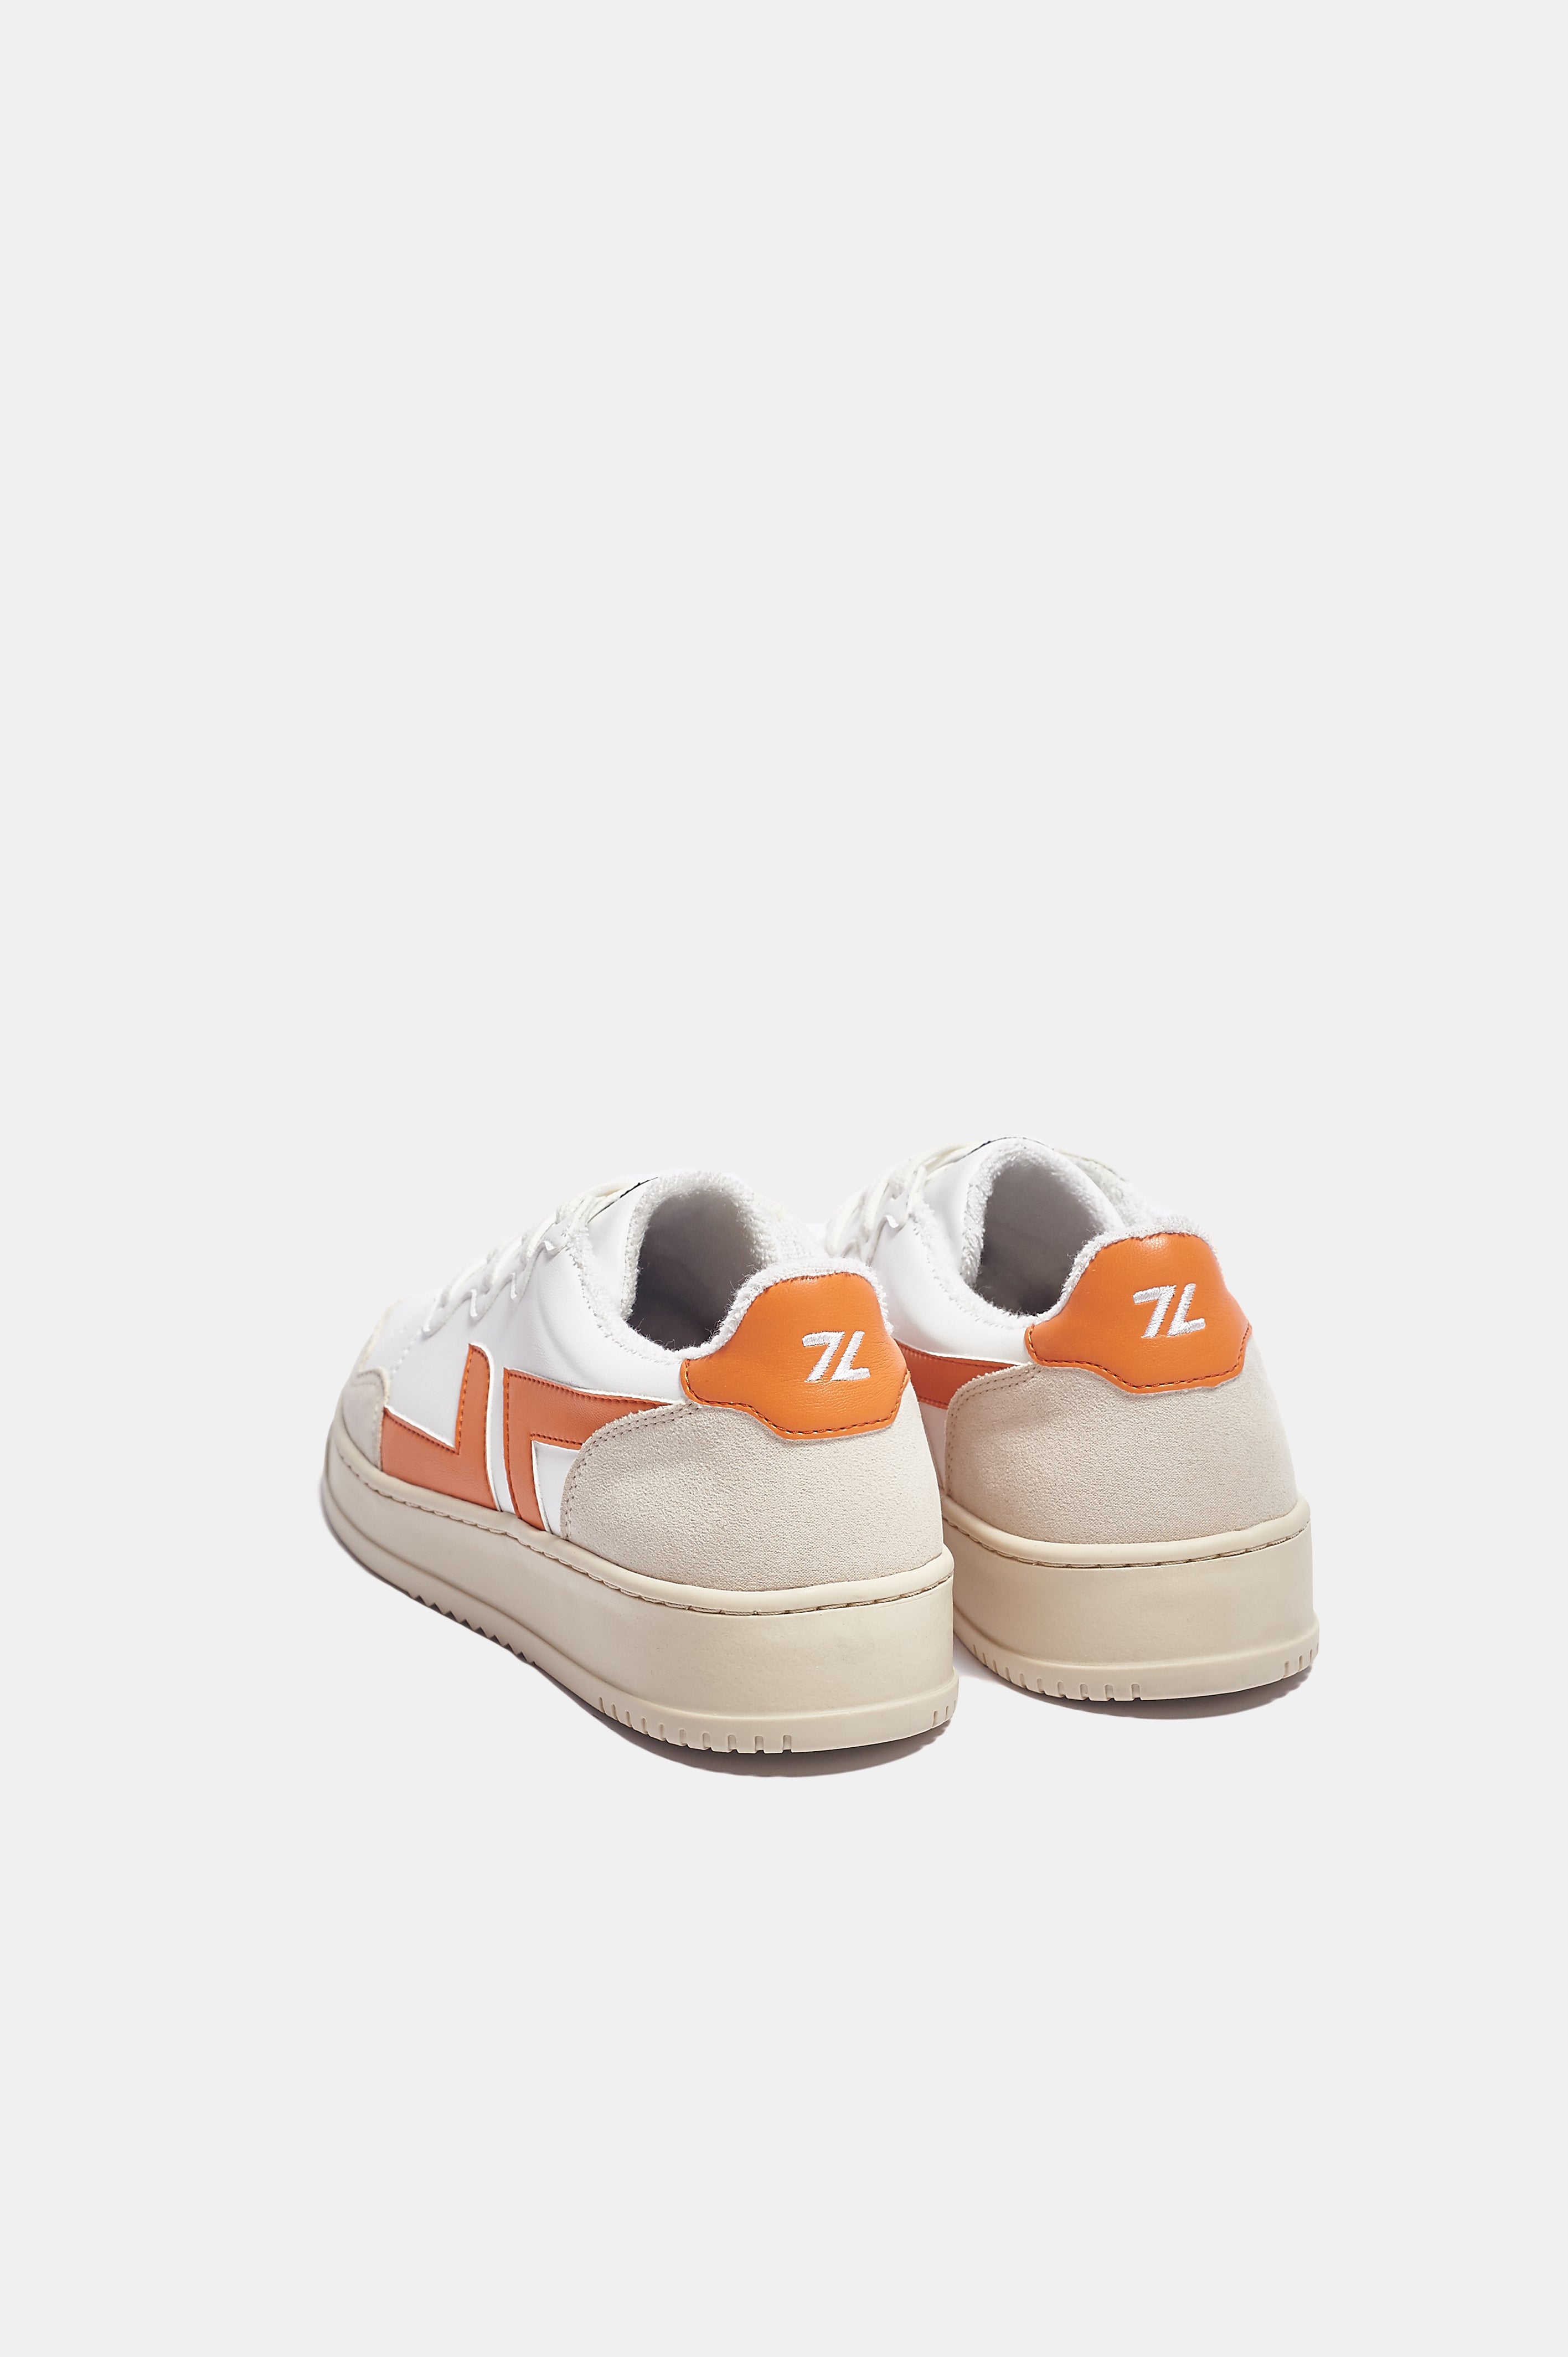 Beta Orange vegan corn leather sneakers